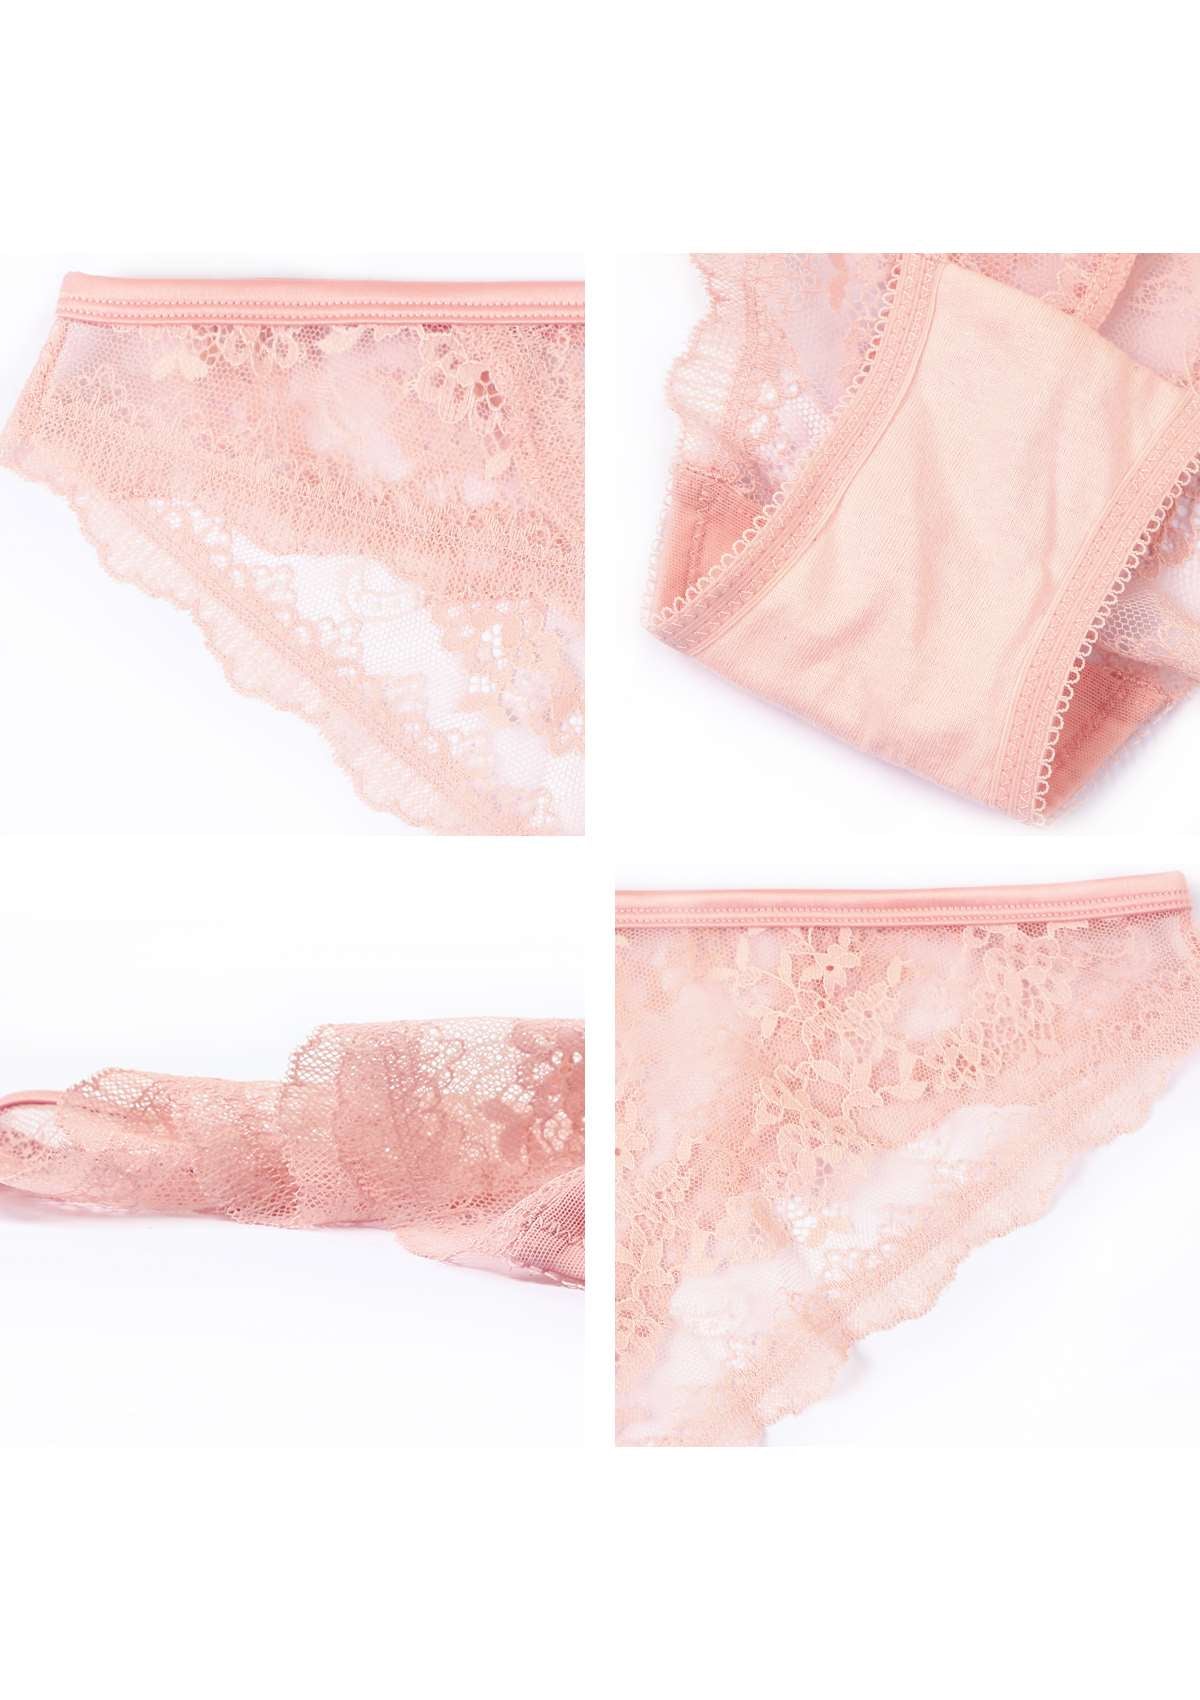 HSIA Floral Bridal Intricate All-Over Lace Romantic Bikini Underwear - Pink / S